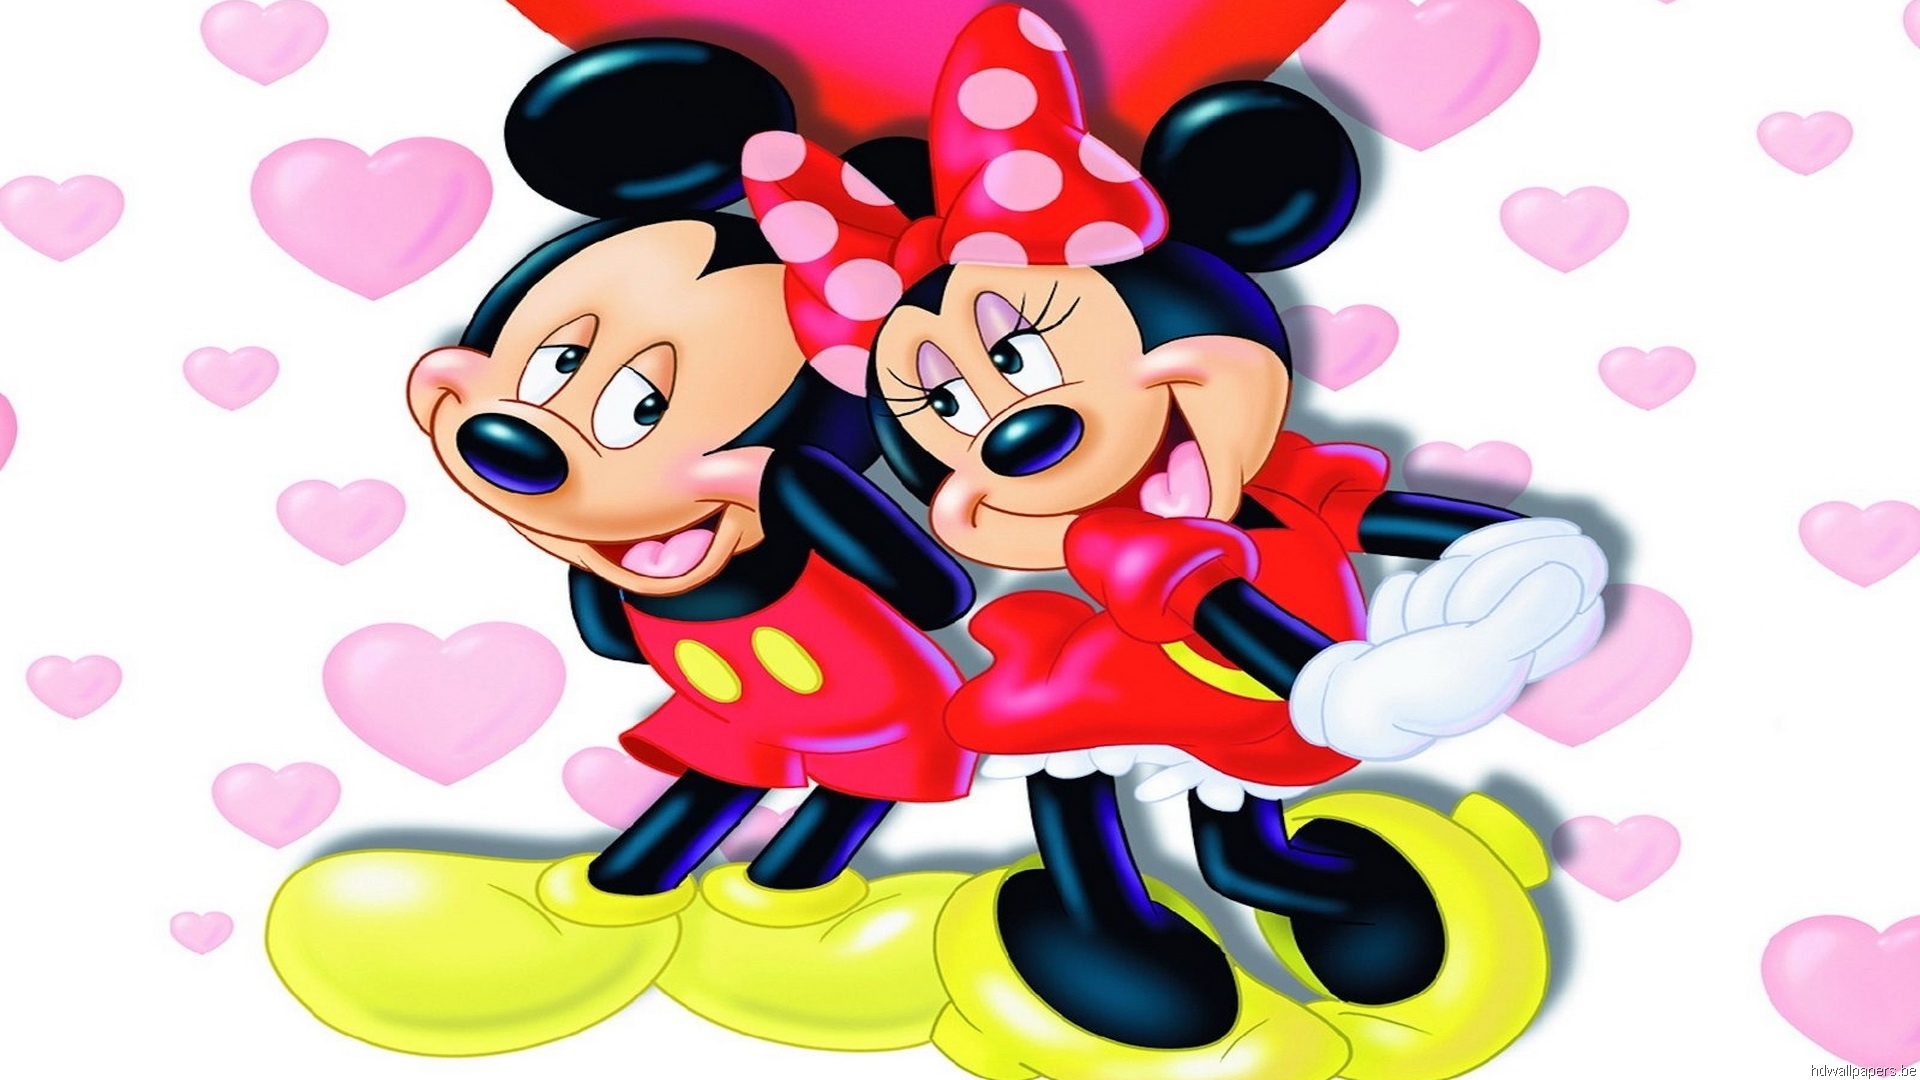 Disney Valentines Wallpaper Backgrounds - WallpaperSafari